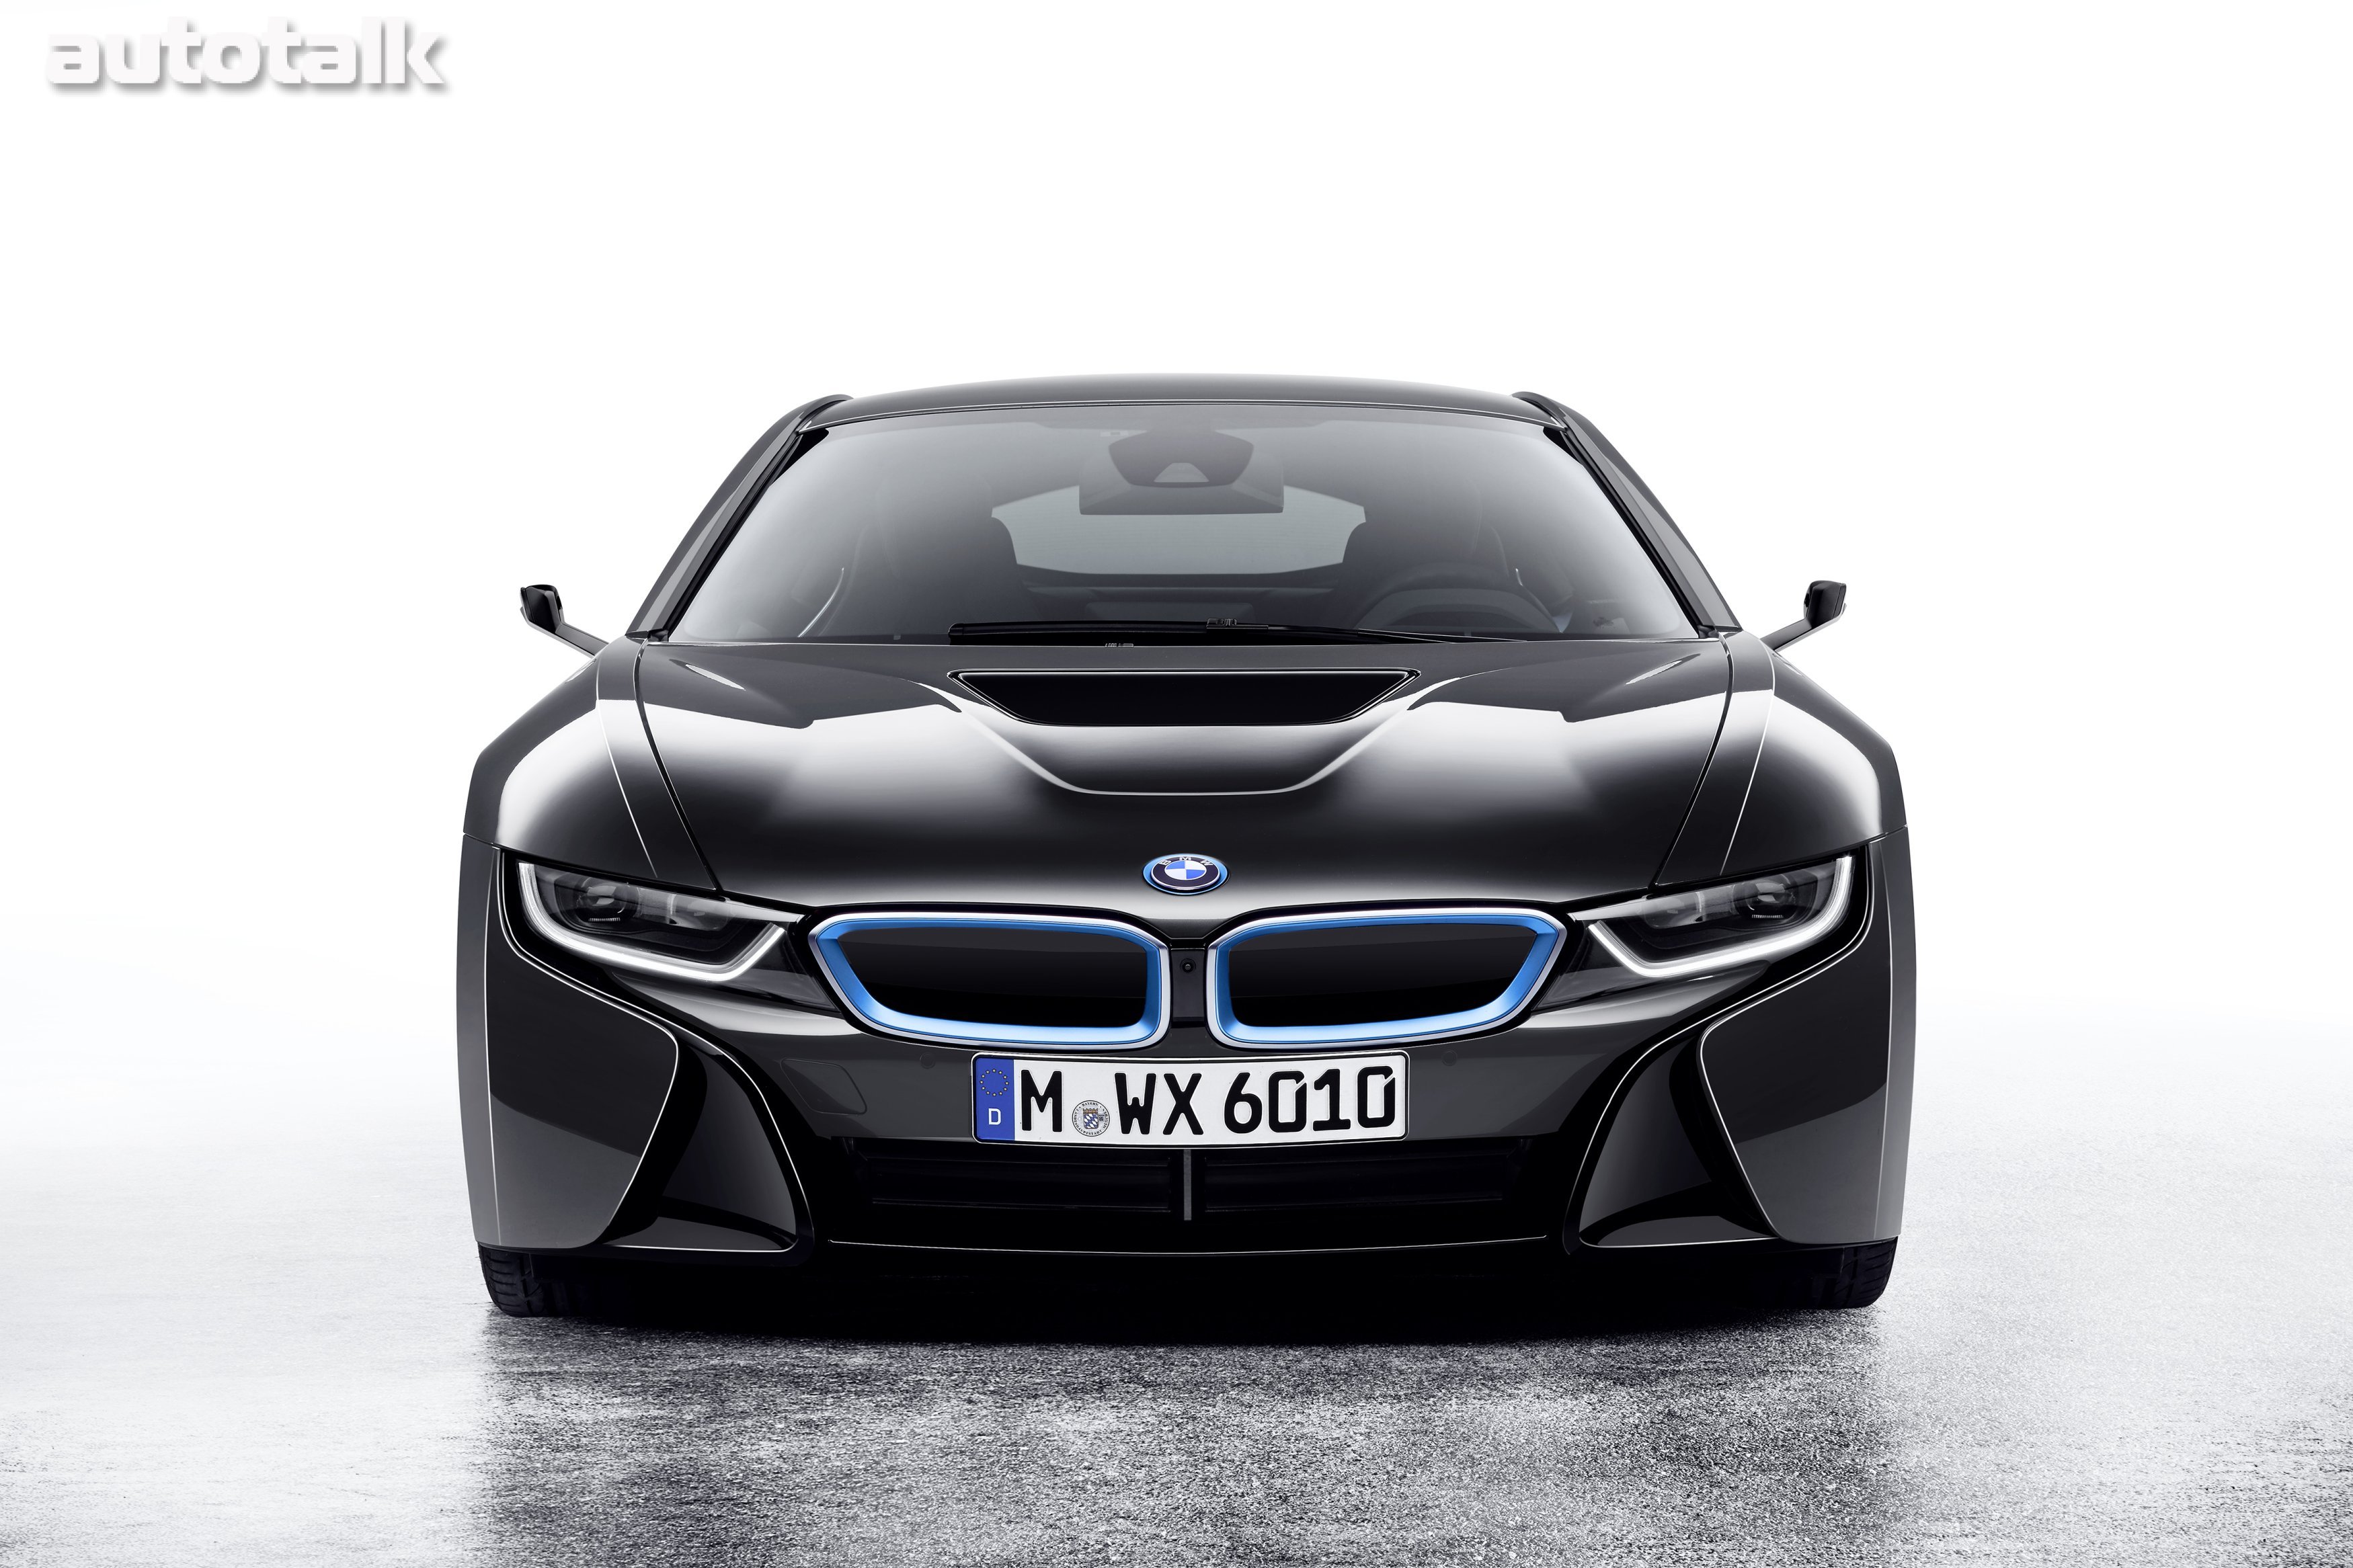 BMW i8 Mirrorless exterior front